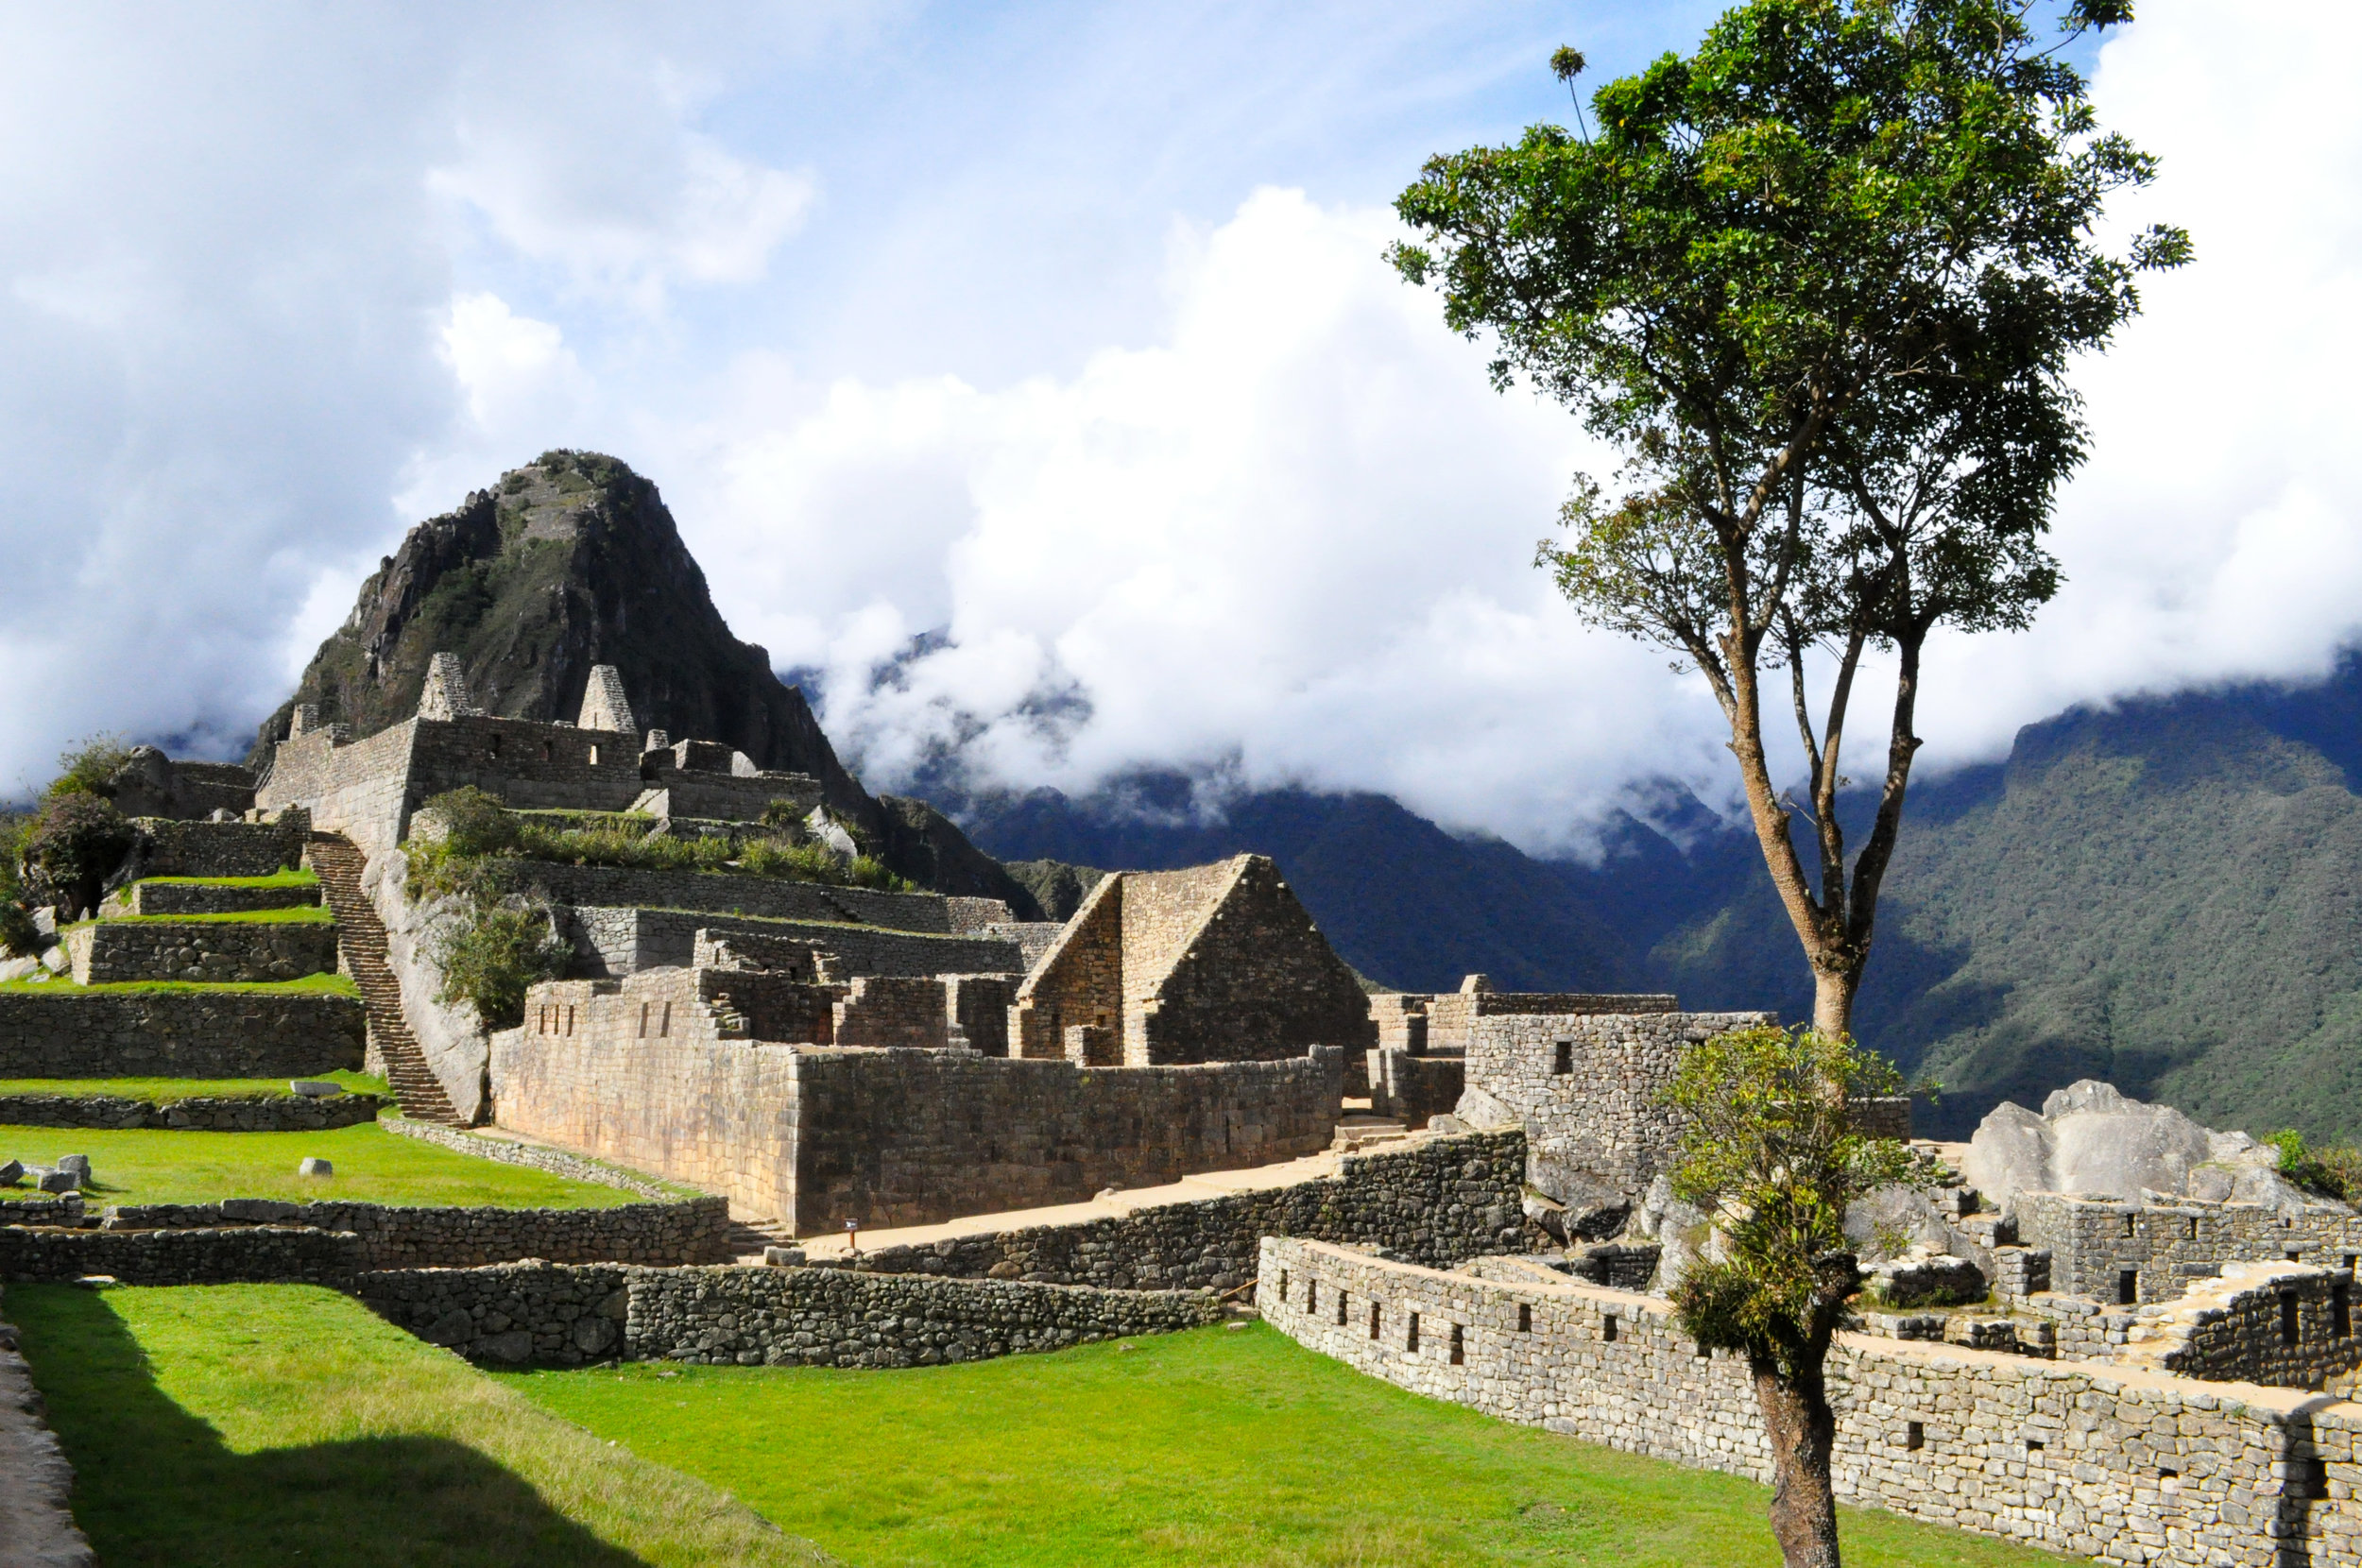 A sister tree grows in Machu Picchu